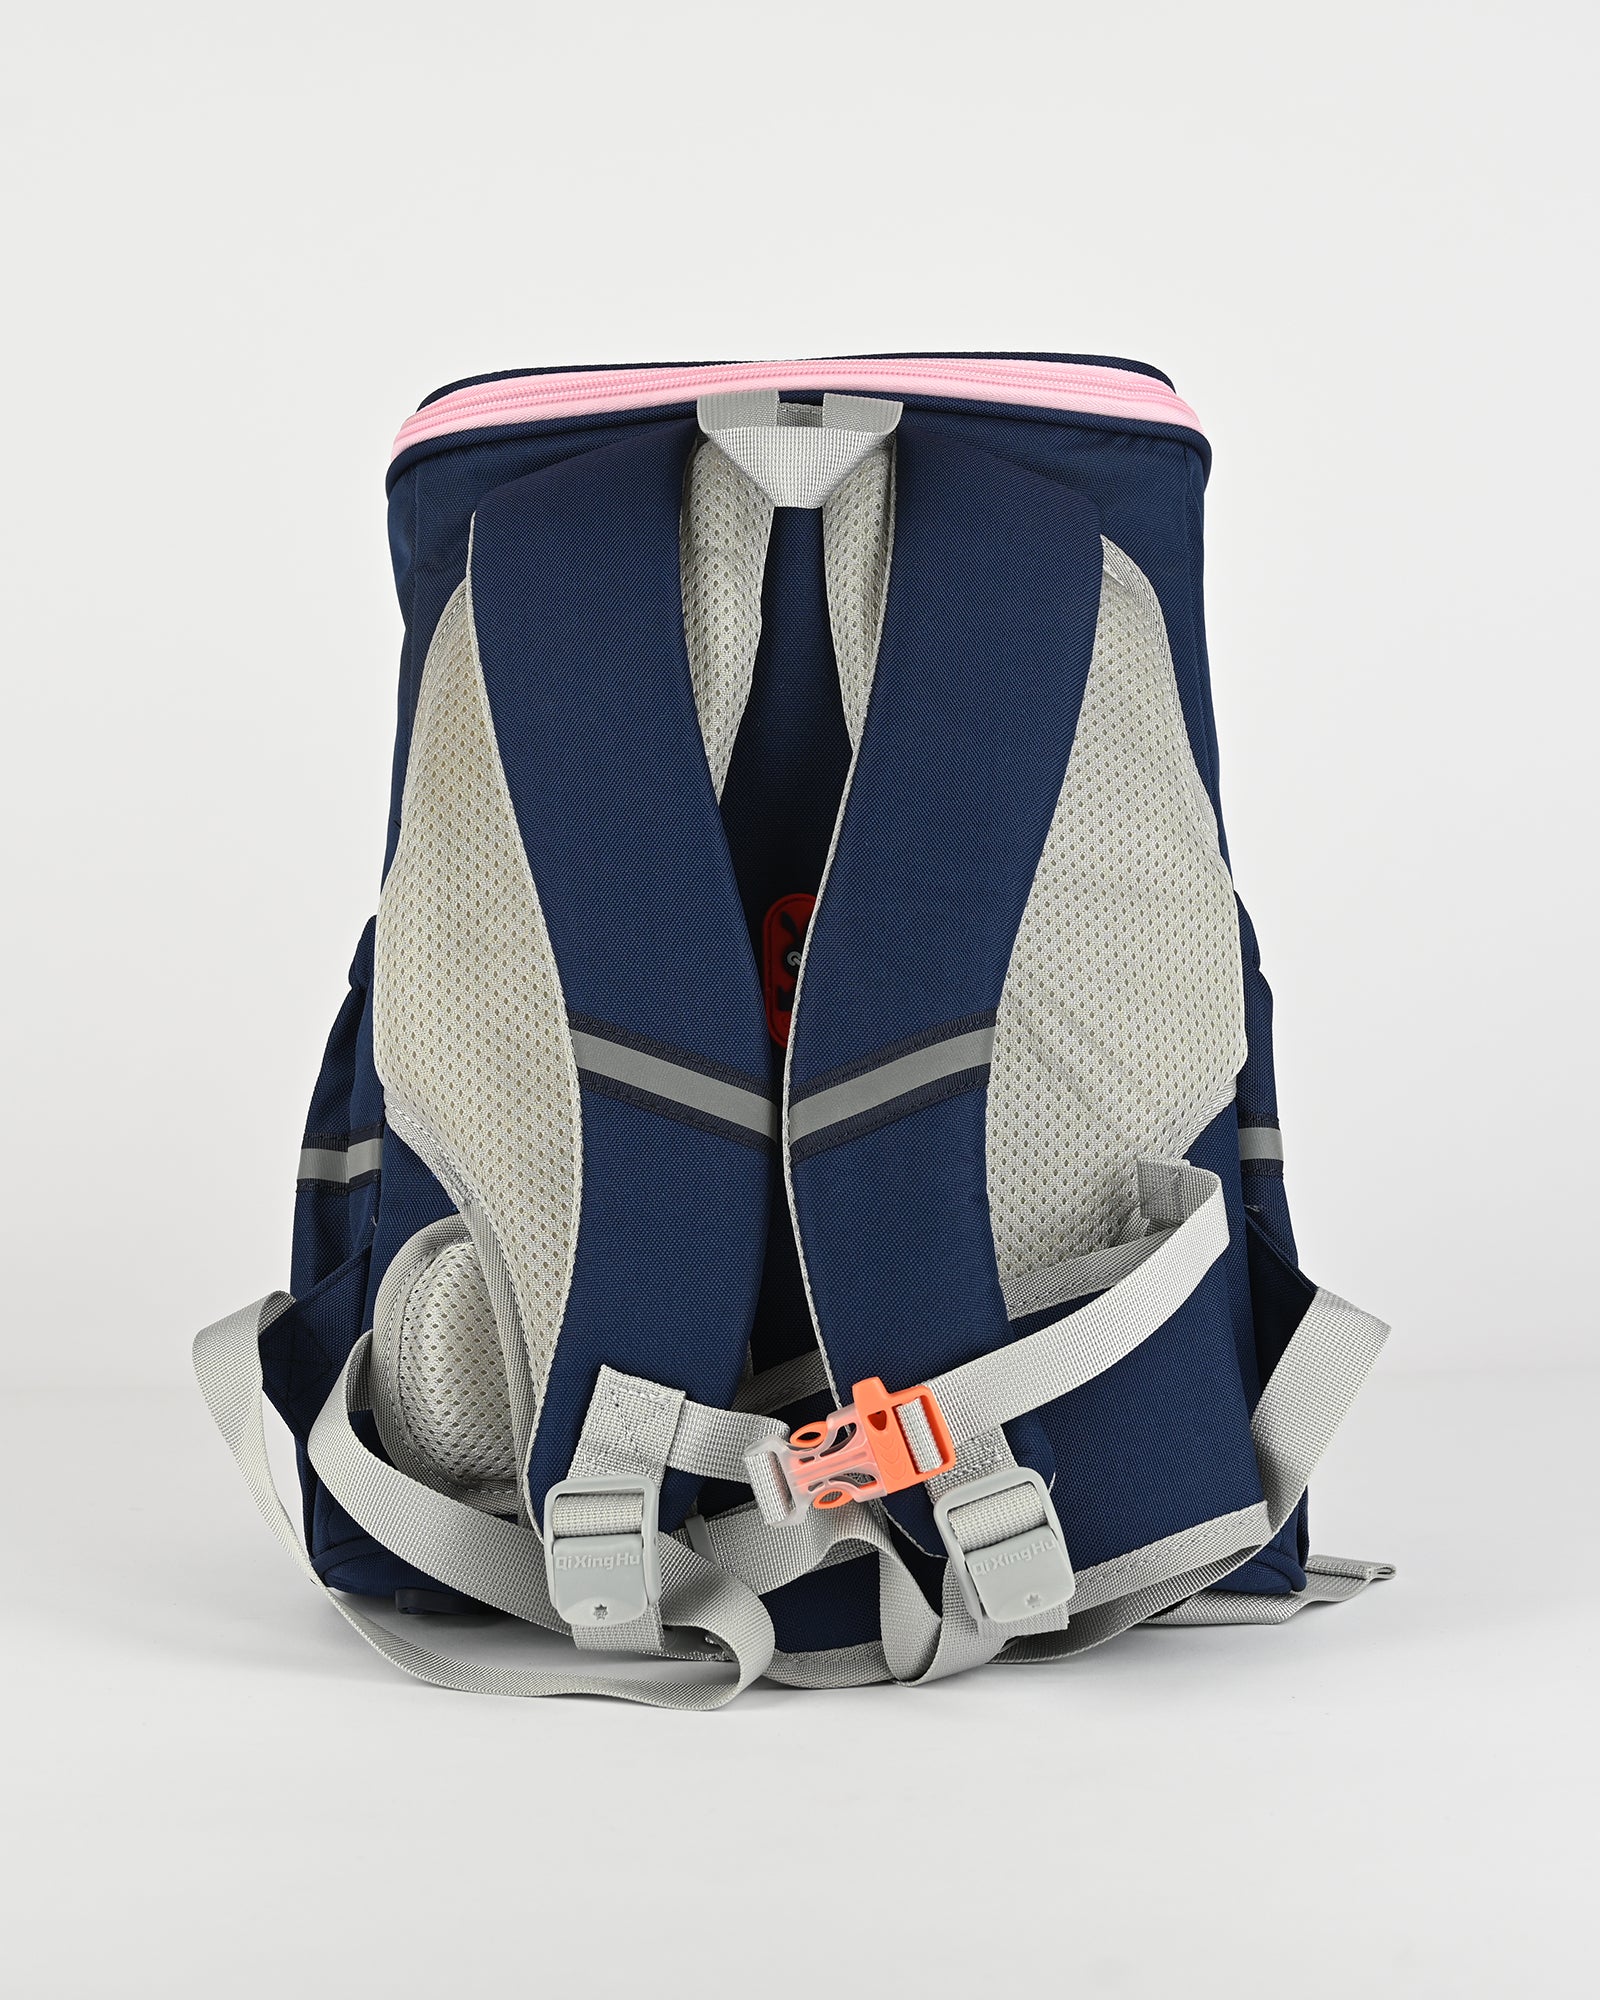 Girls zipper classic school bag